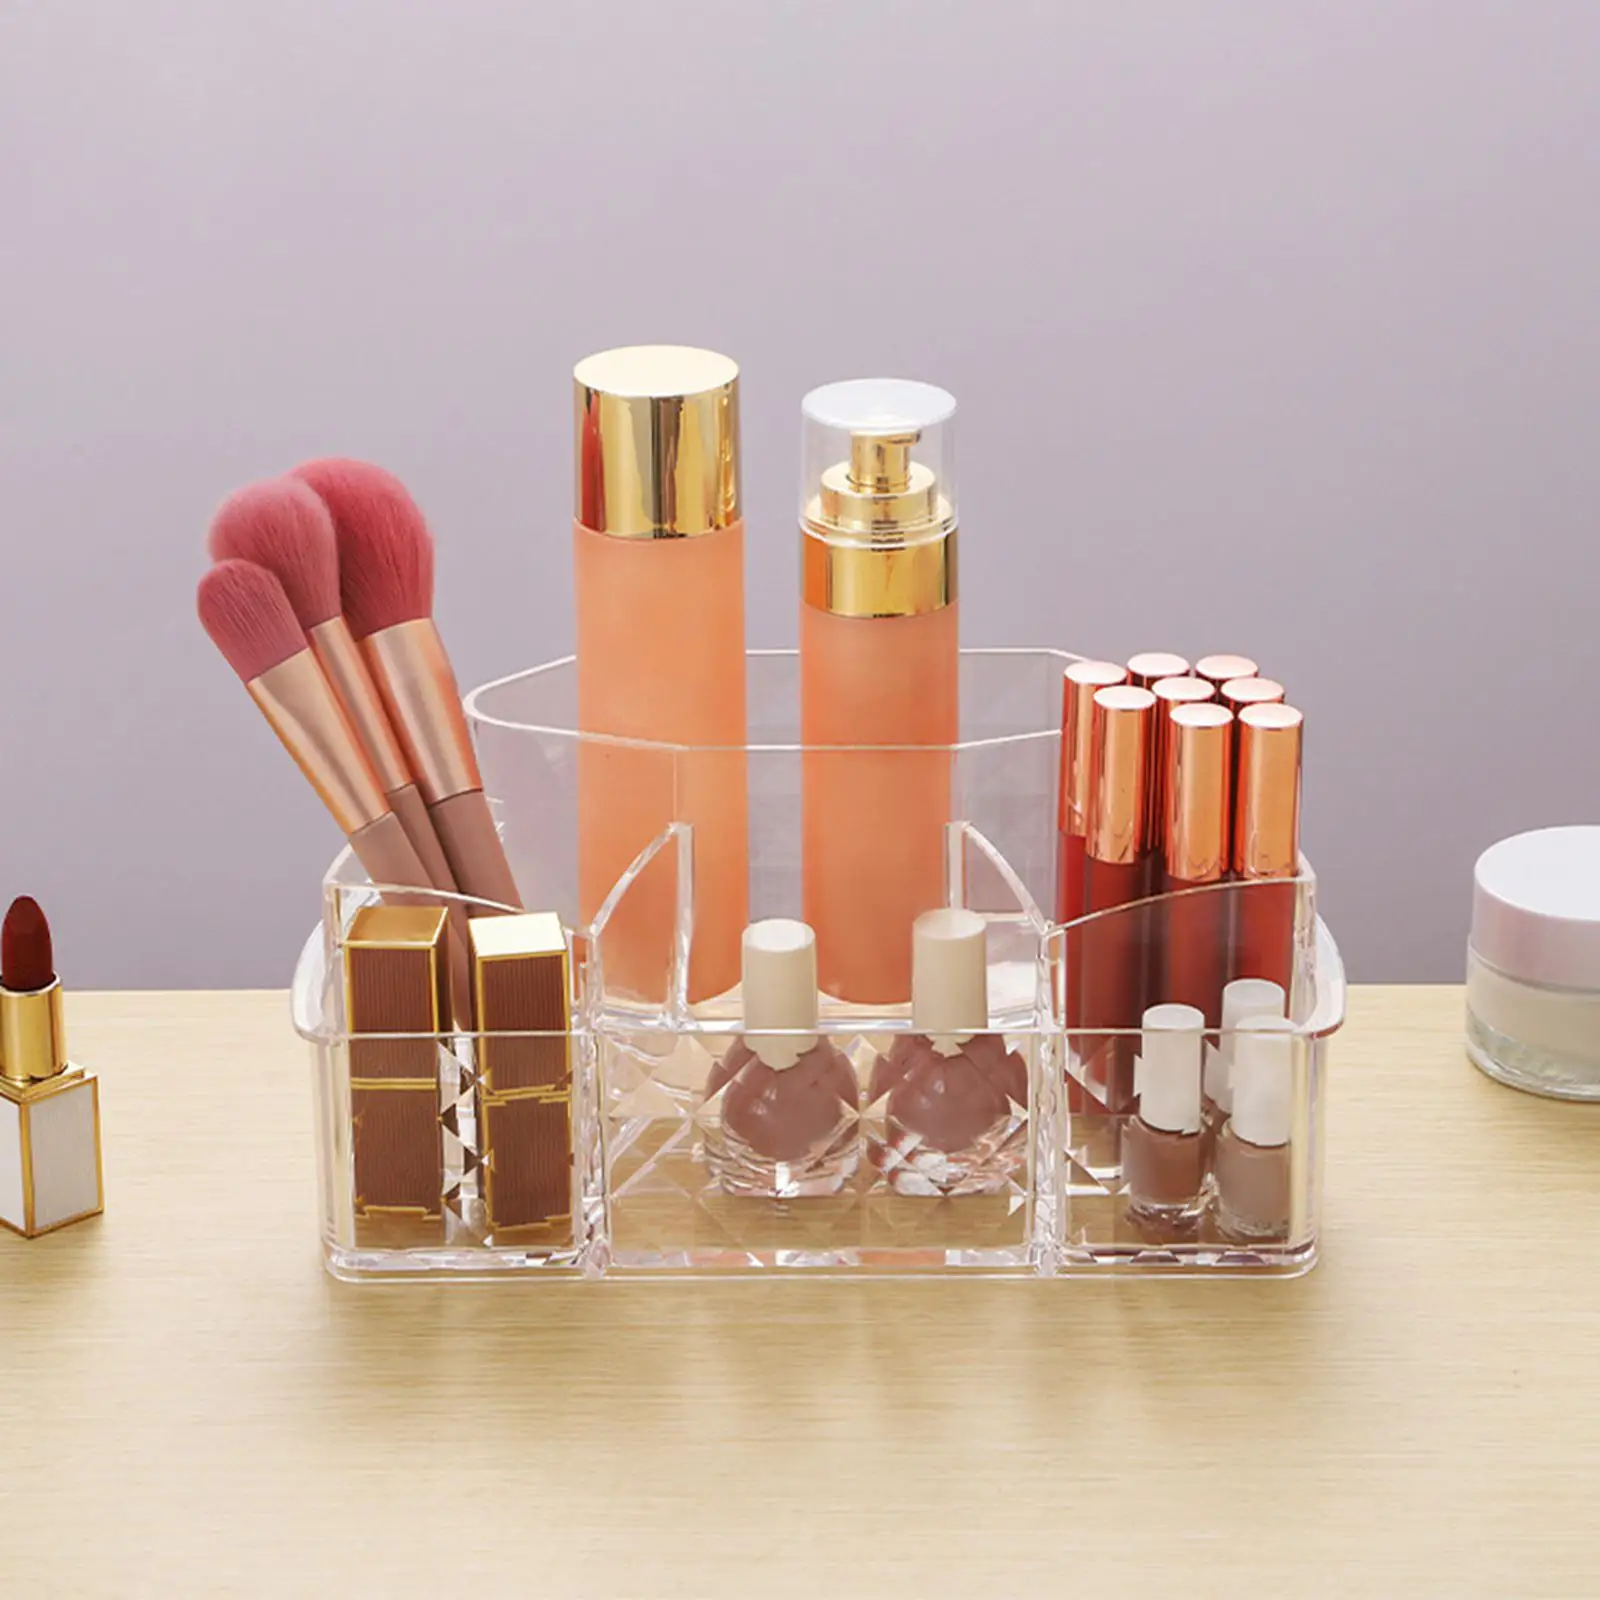 Makeup Organizer Display Case for Lipstick Brushes Hair Accessories Dresser Bathroom